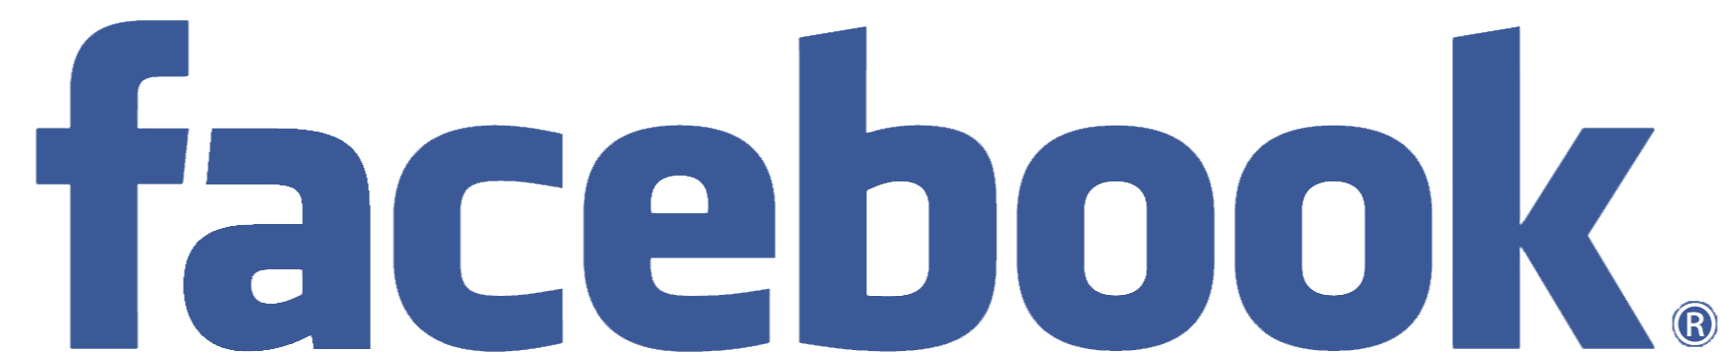 facebook-logo-png-1722.png